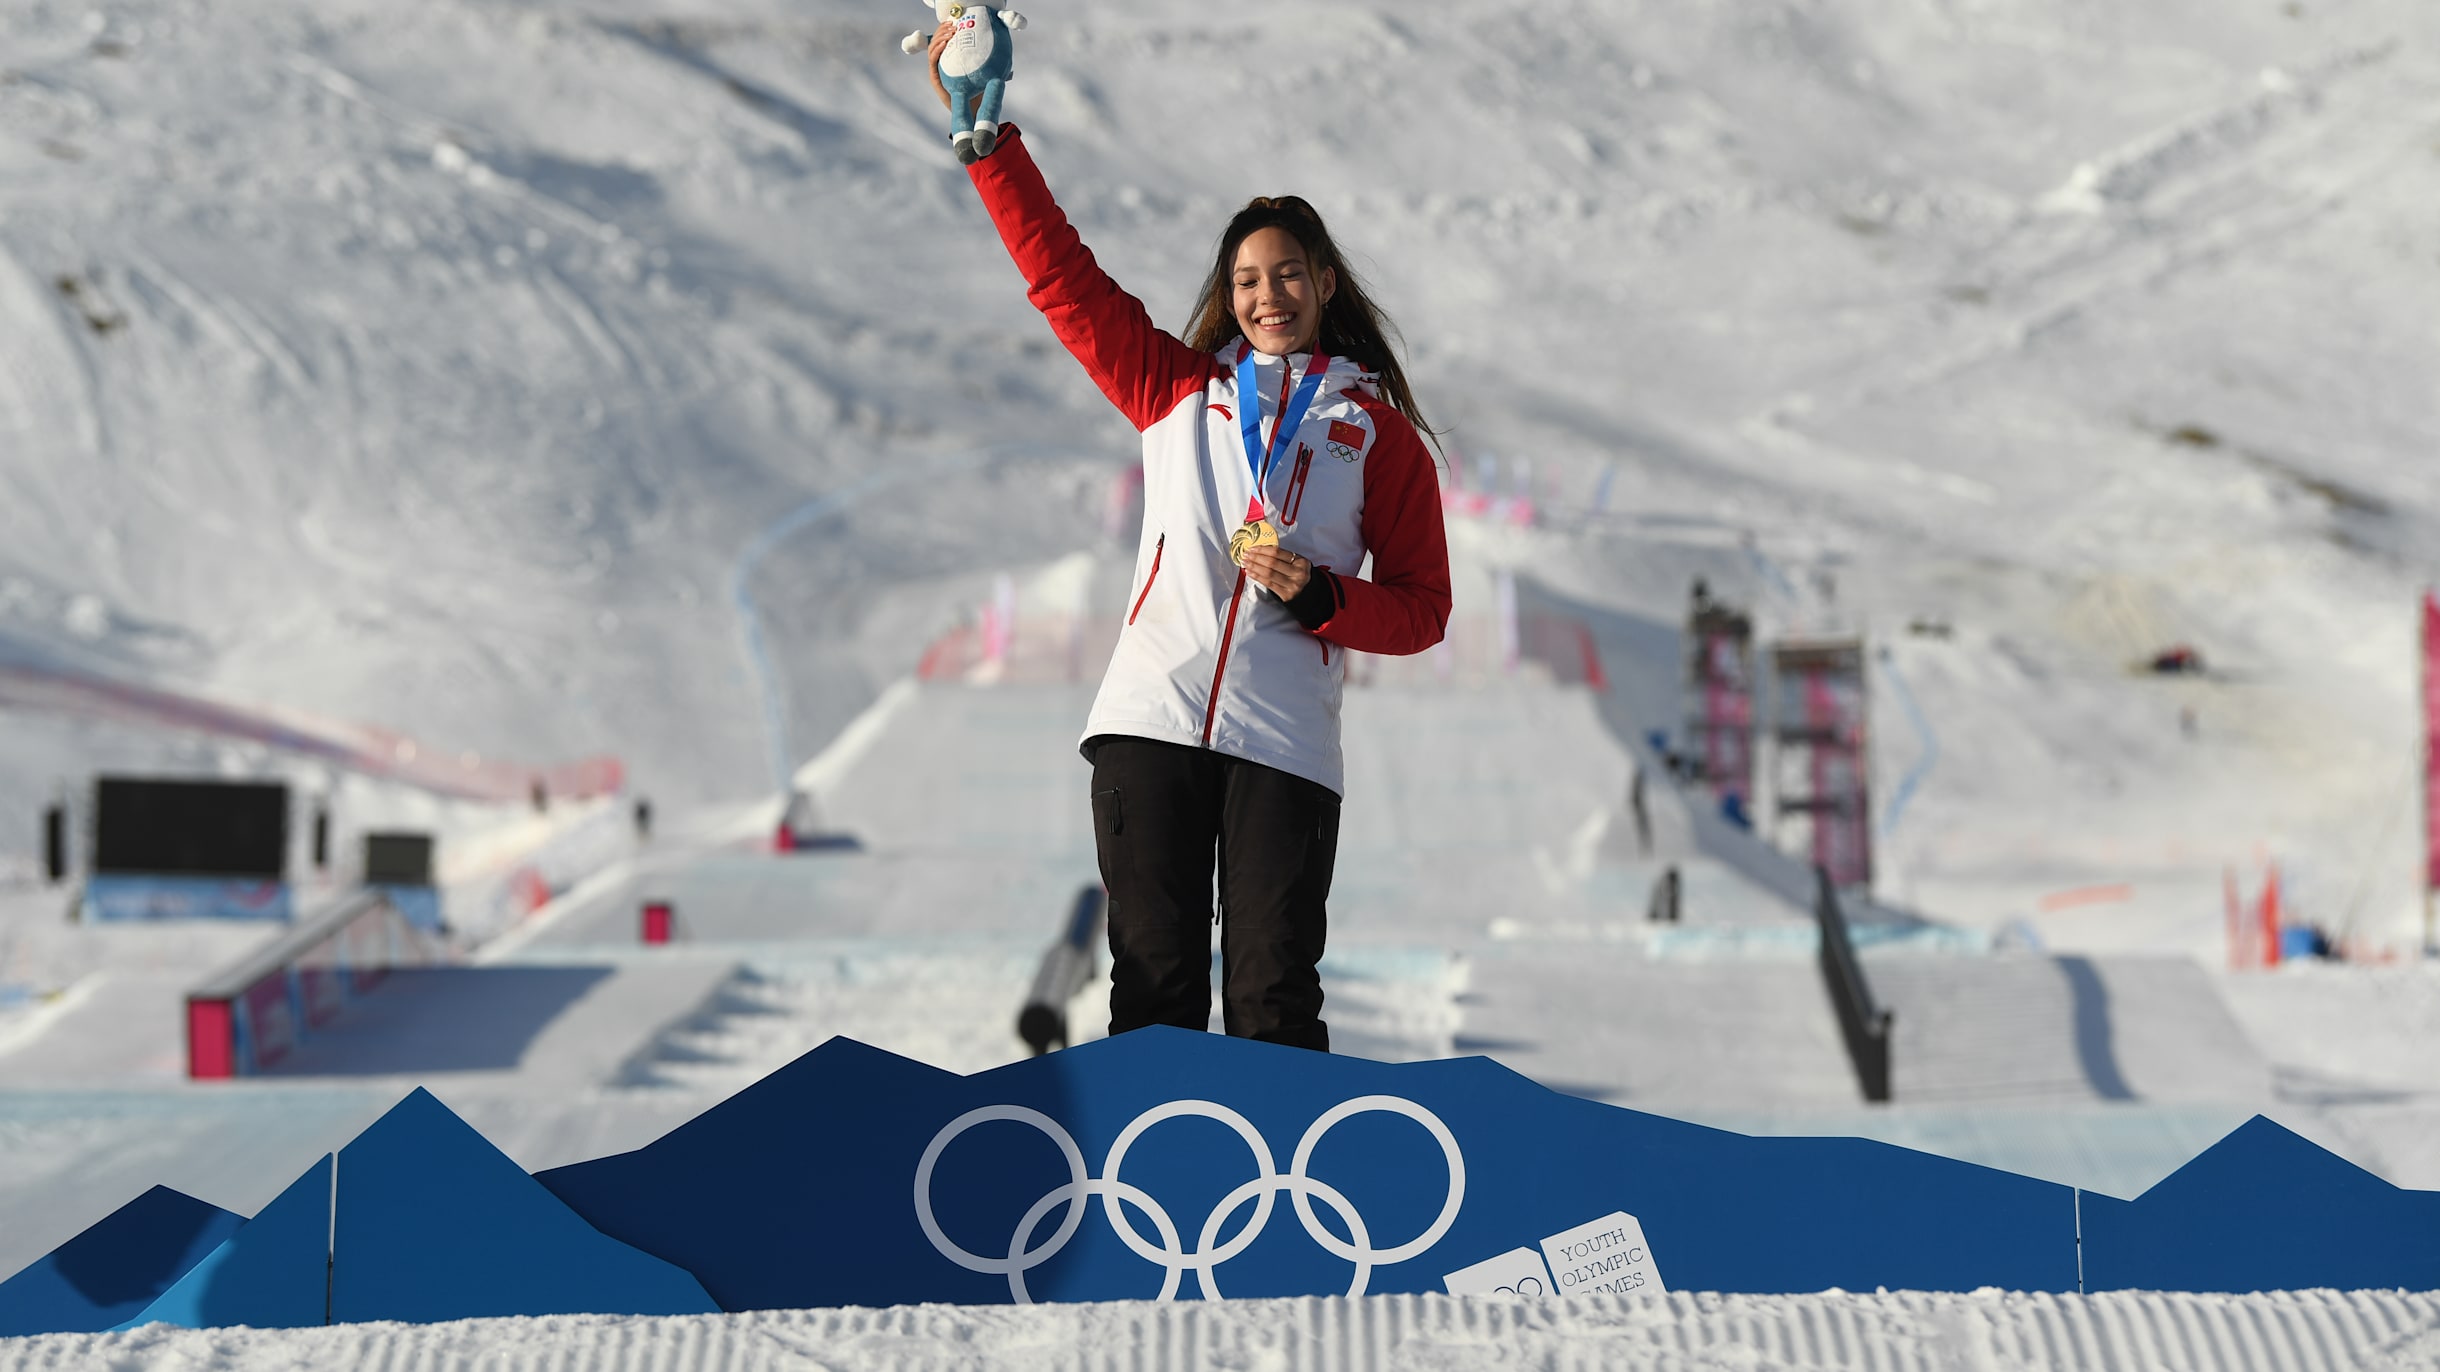 Rising ski star Eileen Gu models Chinese Olympic gear, turns